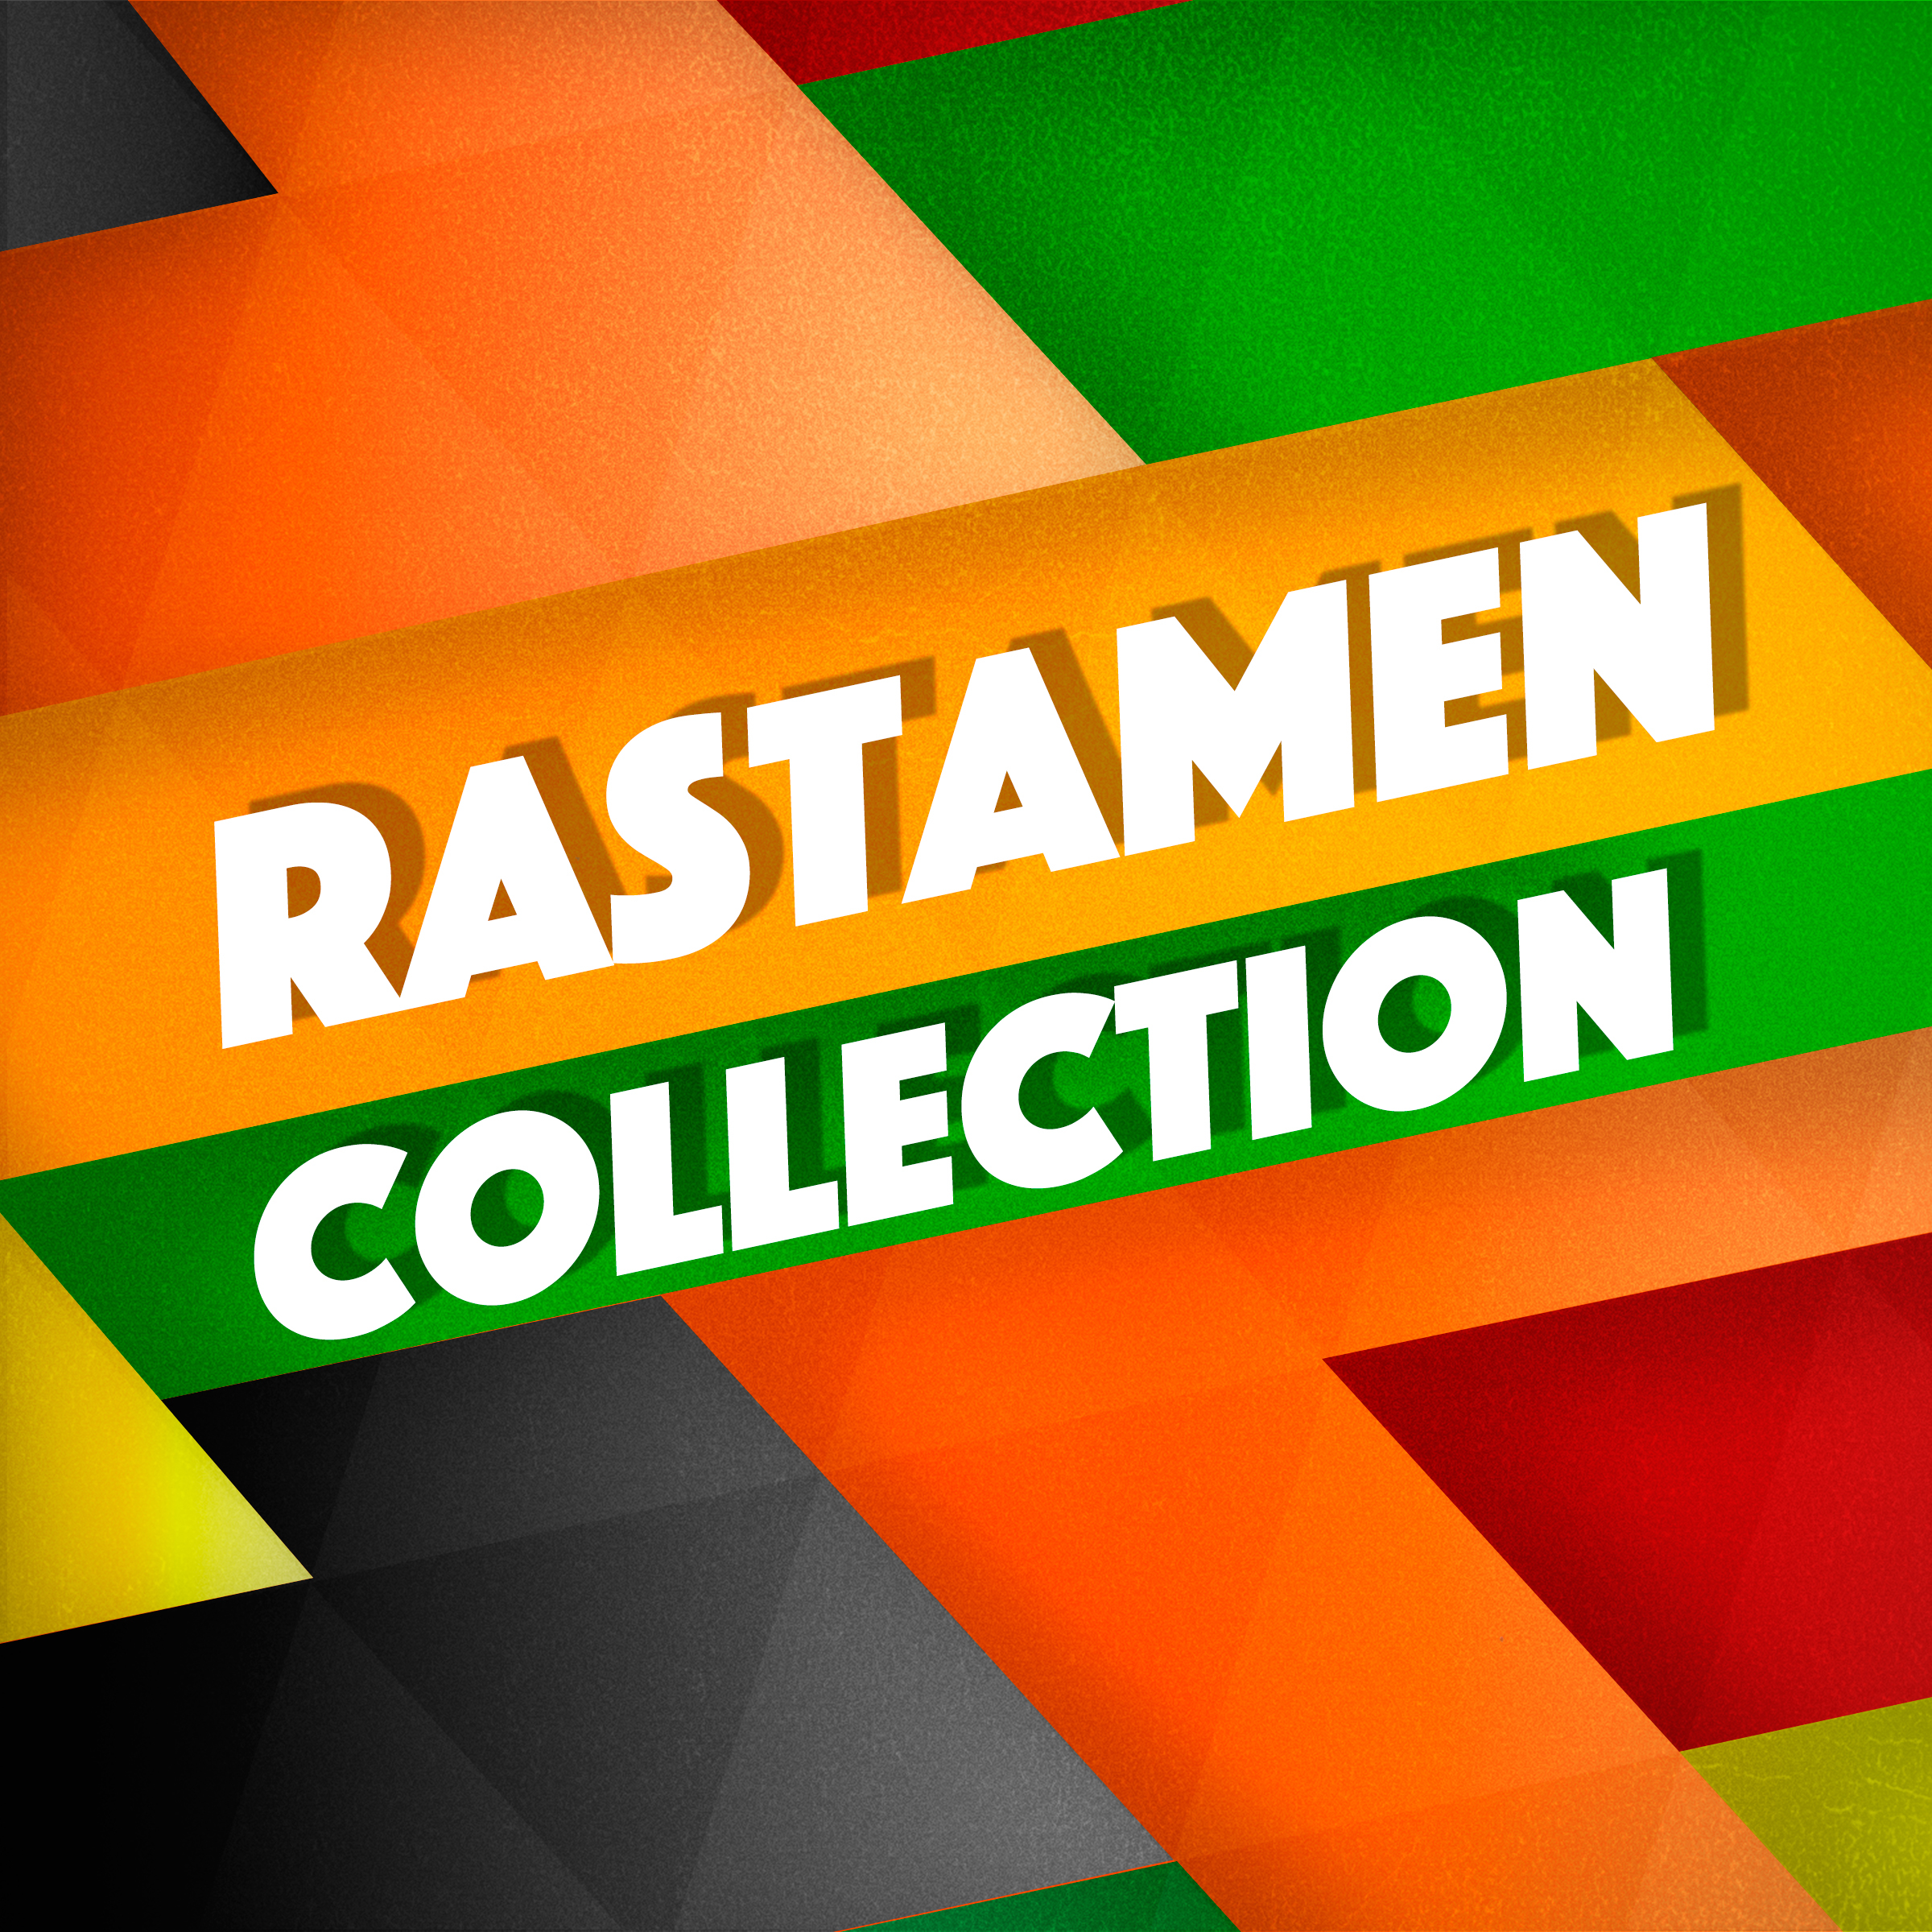 Rastamen Collection